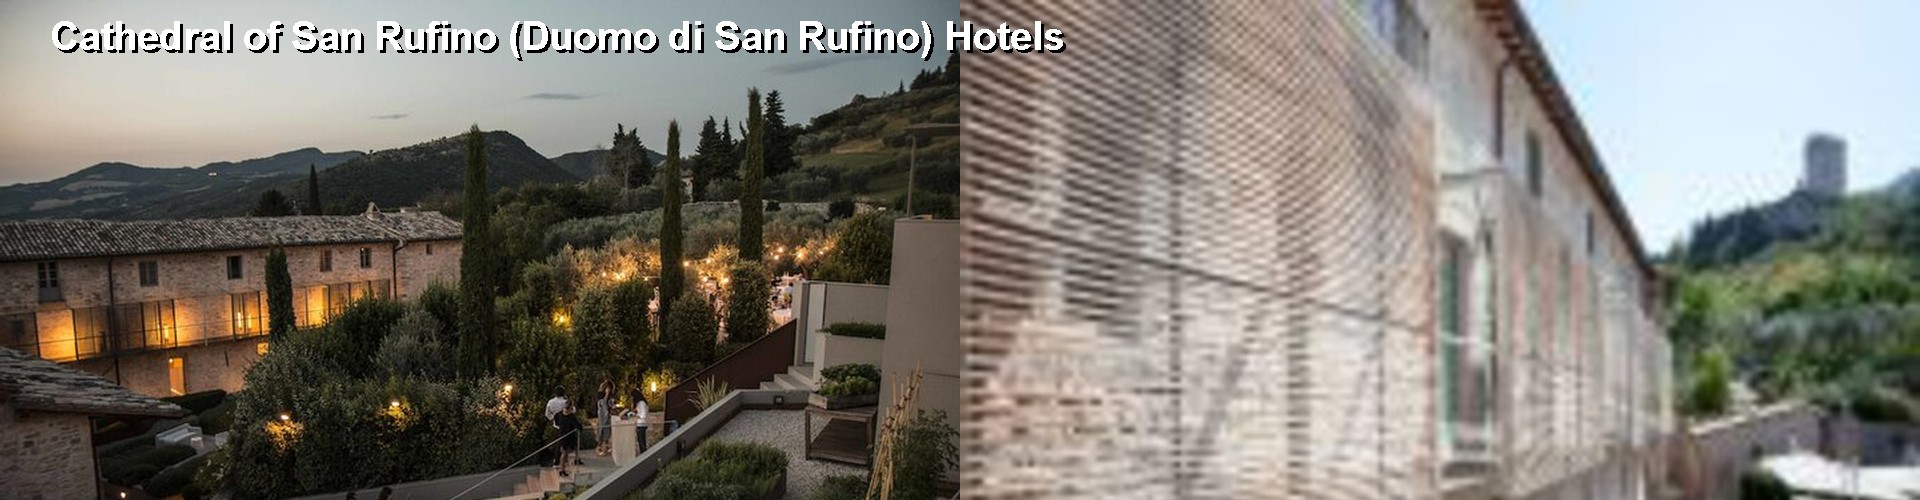 5 Best Hotels near Cathedral of San Rufino (Duomo di San Rufino)